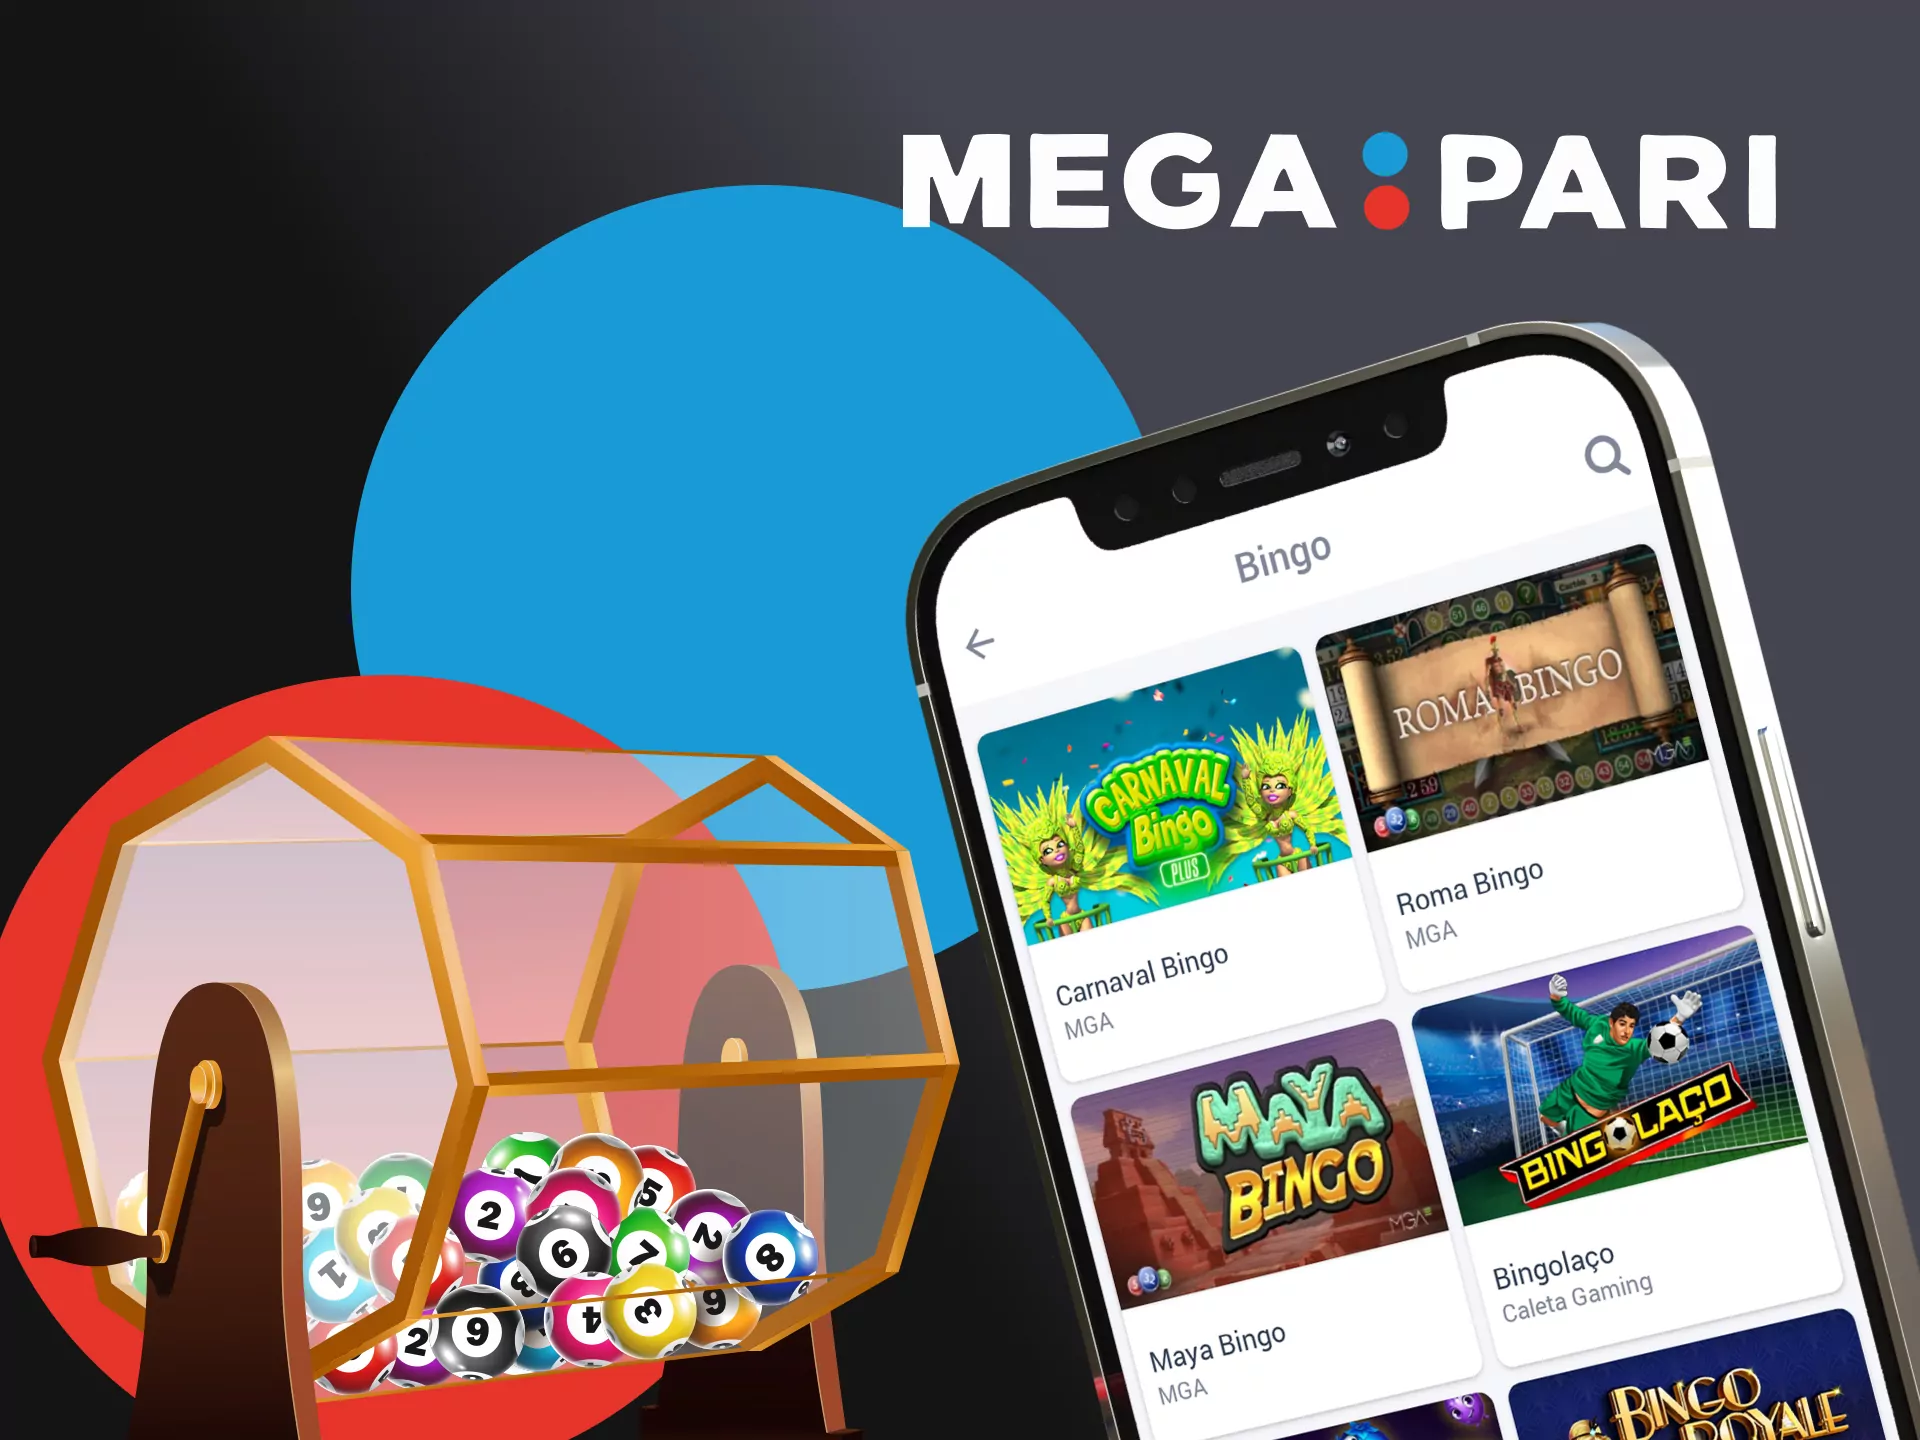 Play bingo with the Megapari iOS app.